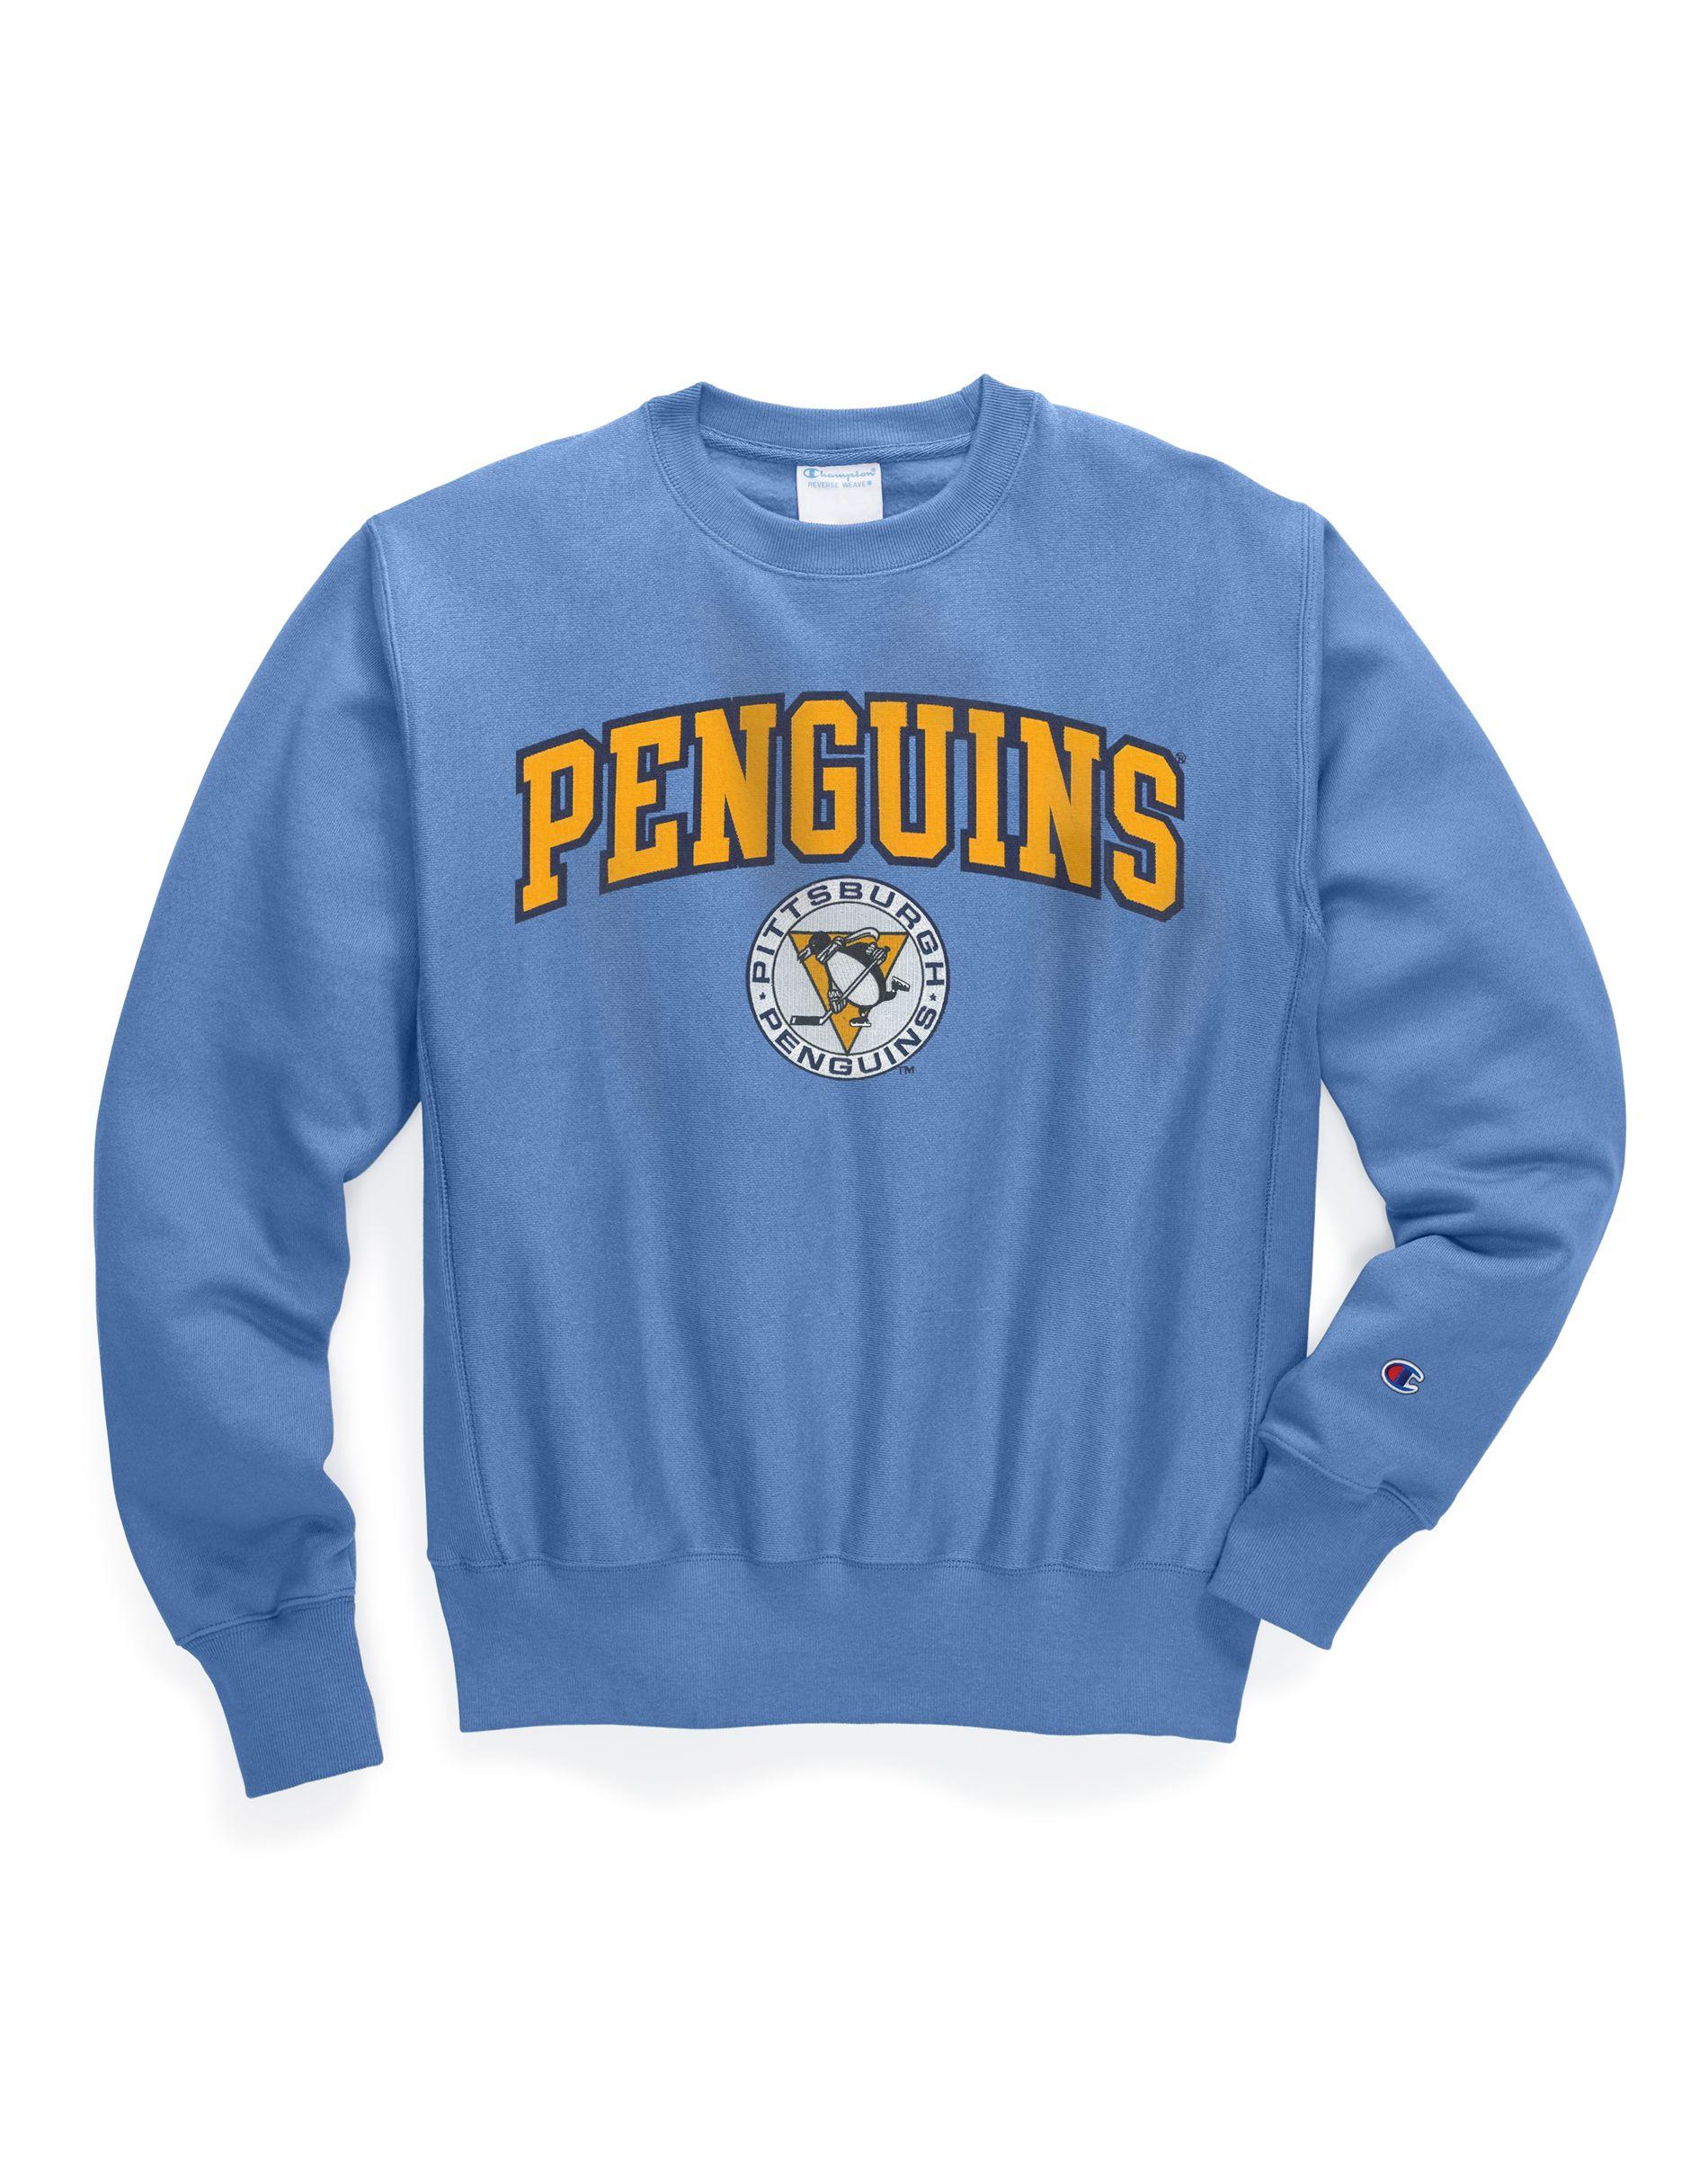 Sequined Nhl Pittsburgh Penguins Sweatshirt